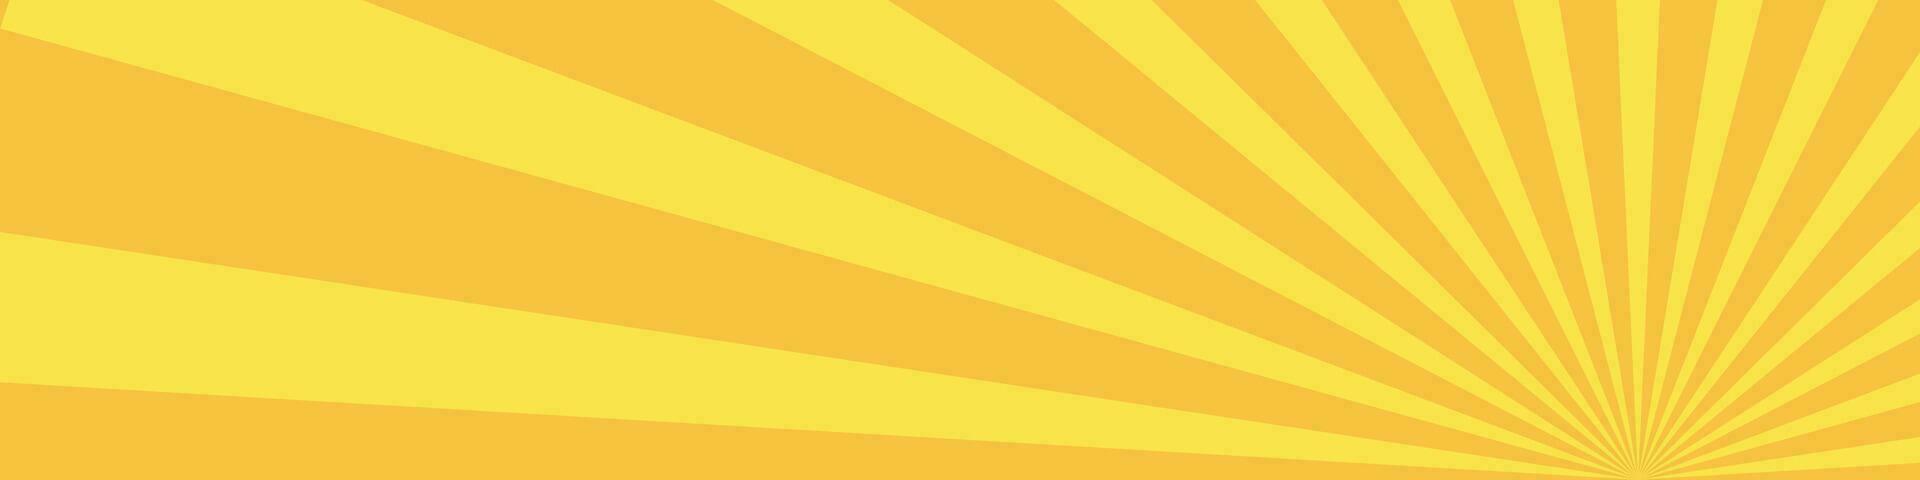 Comic sunburst with vibrant yellow sun beams. Radiant pop art pattern emphasizing orange light. background featuring radial rays and beam details. Flat illustration vector